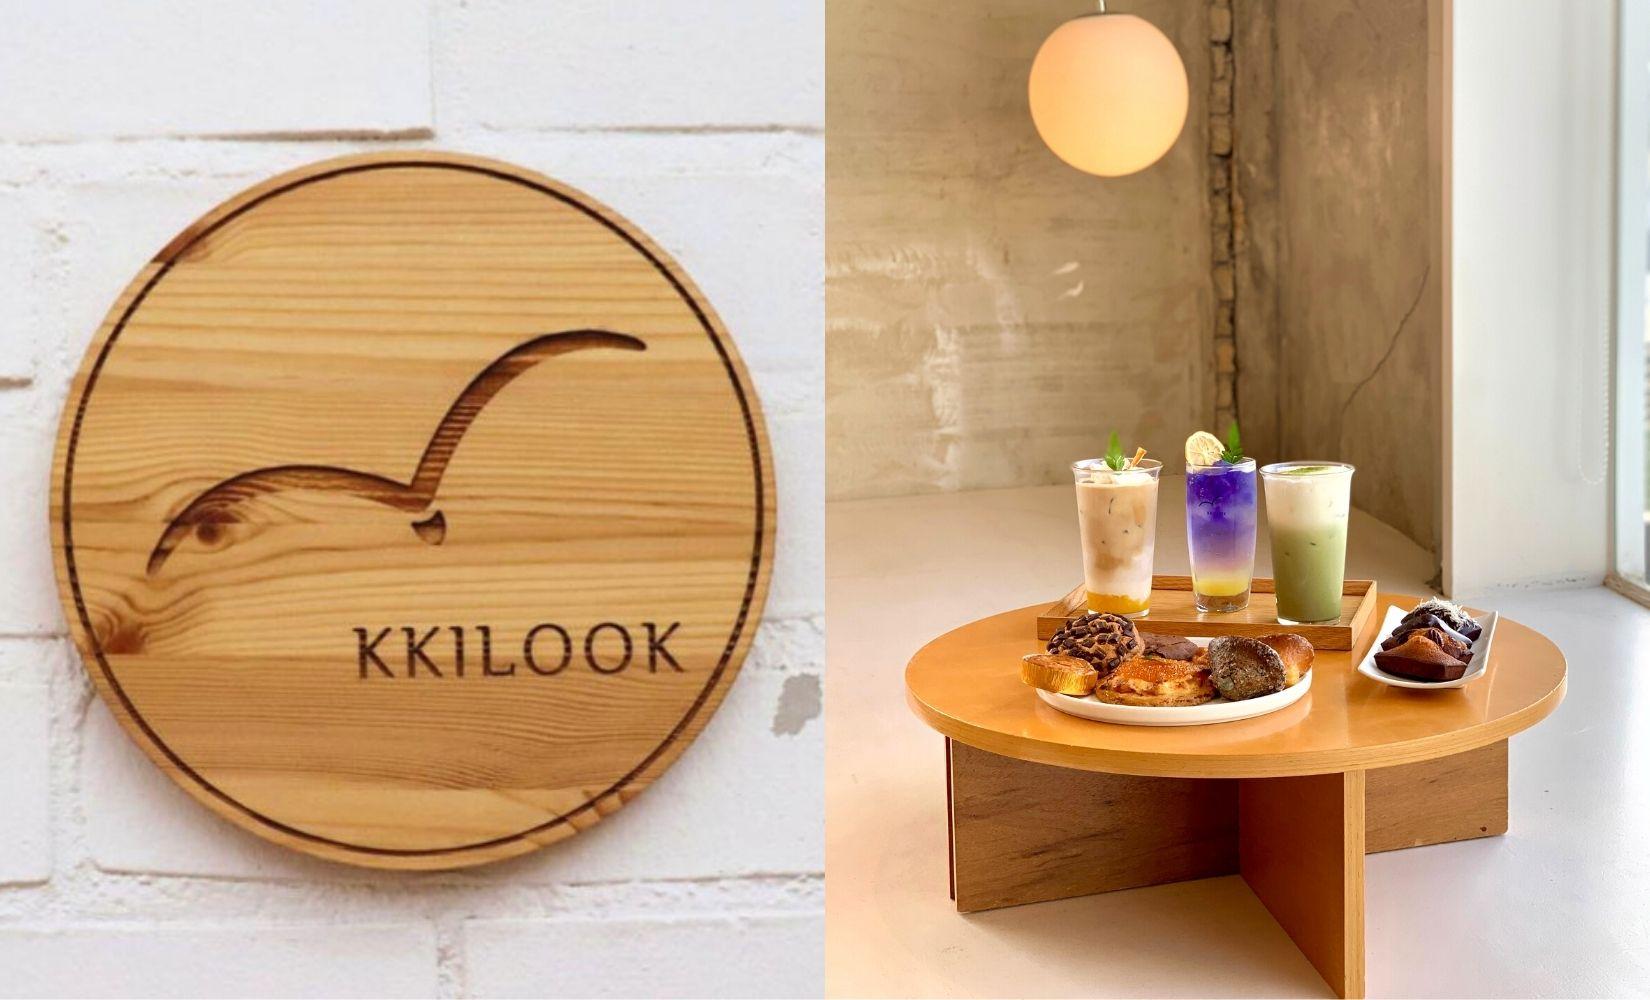 Kkilook | Ikseondong Cafe With Rooftop Views